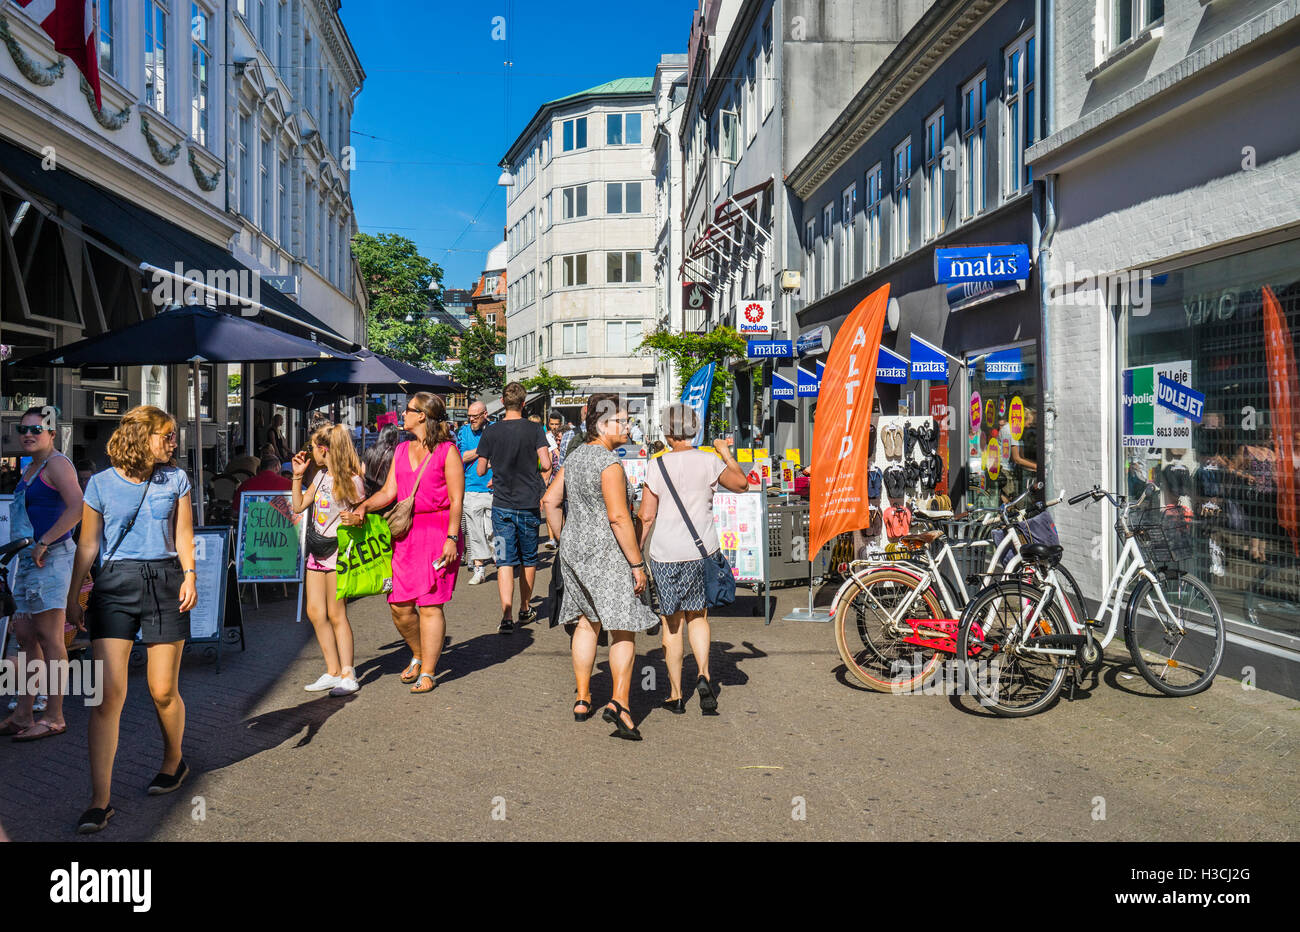 Dinamarca, Fionia, Odense, Vestergade popular centro comercial peatonal Foto de stock